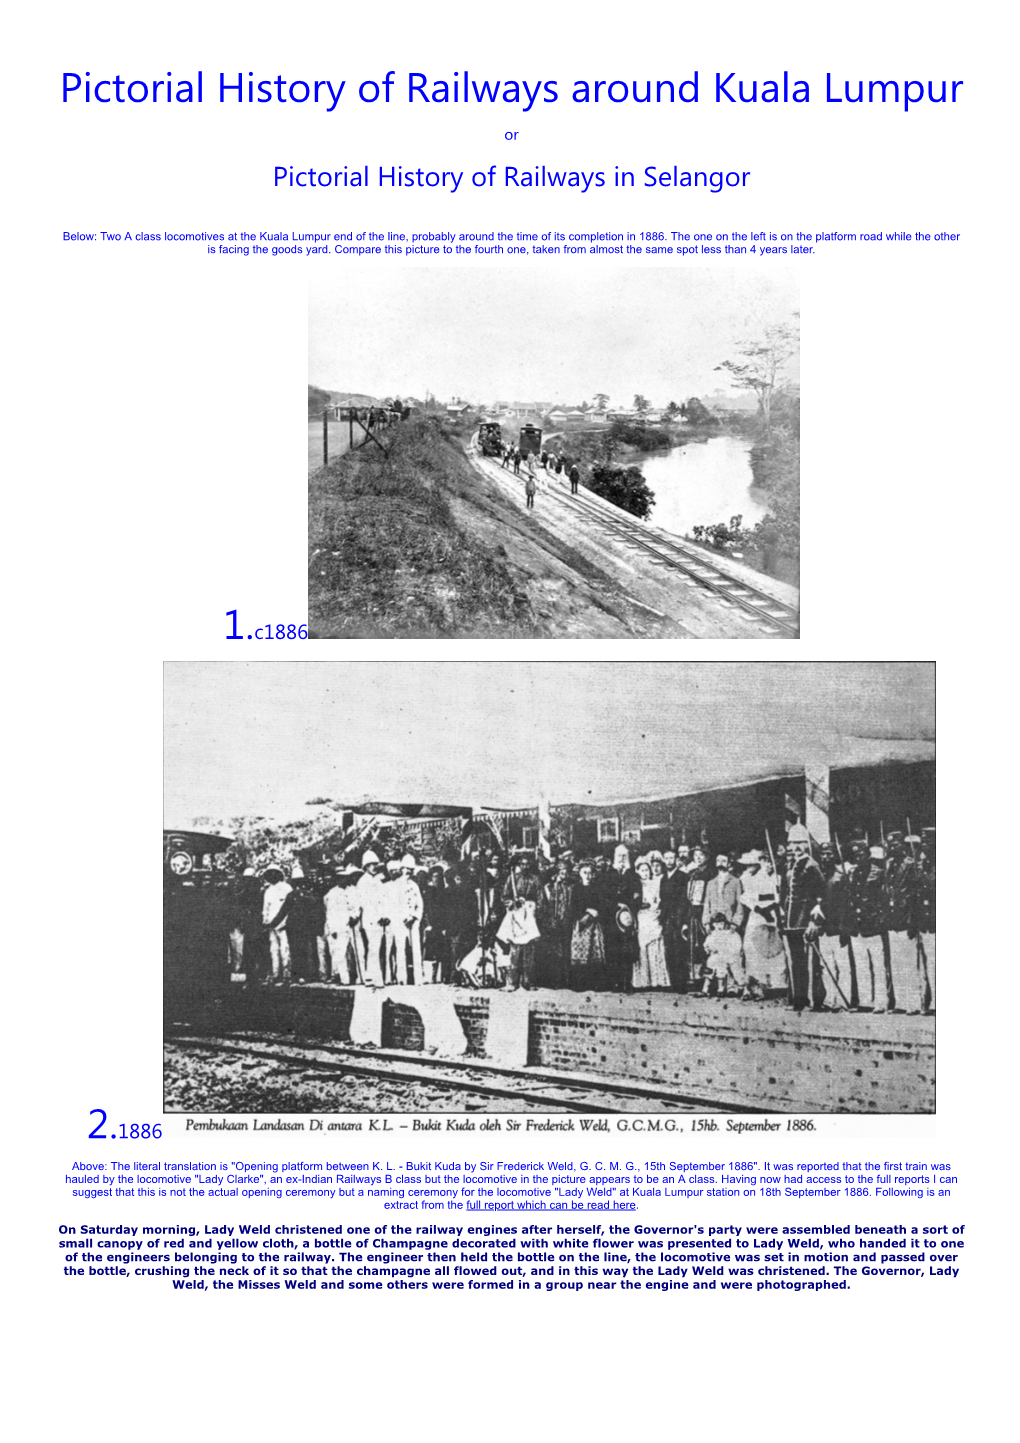 Pictorial History of Railways Around Kuala Lumpur